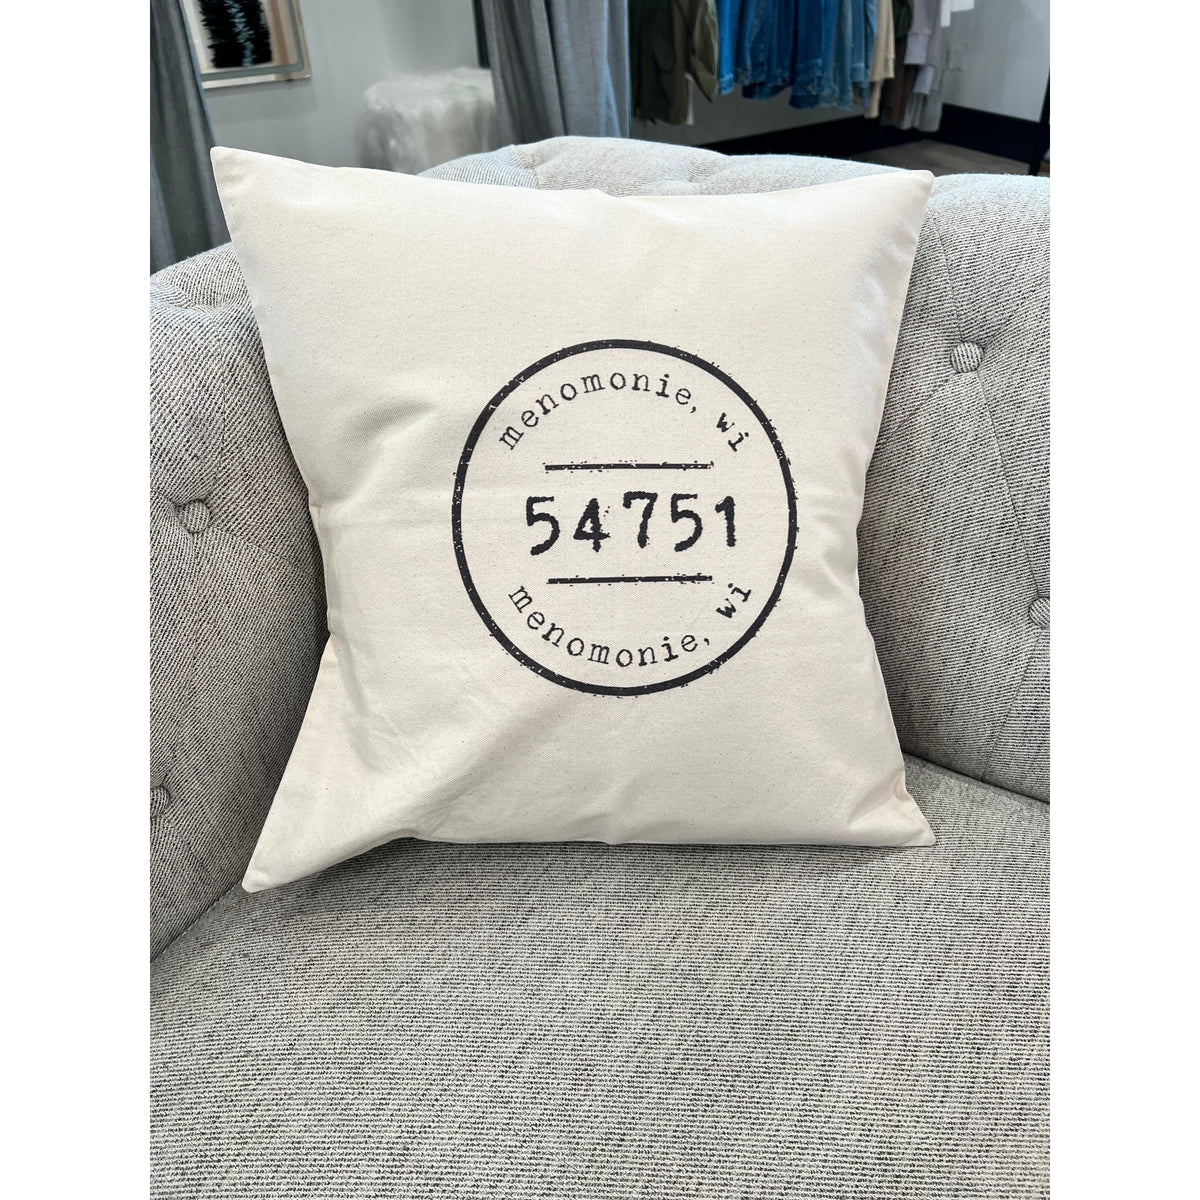 Menomonie, WI  54751 - Square Canvas Pillow